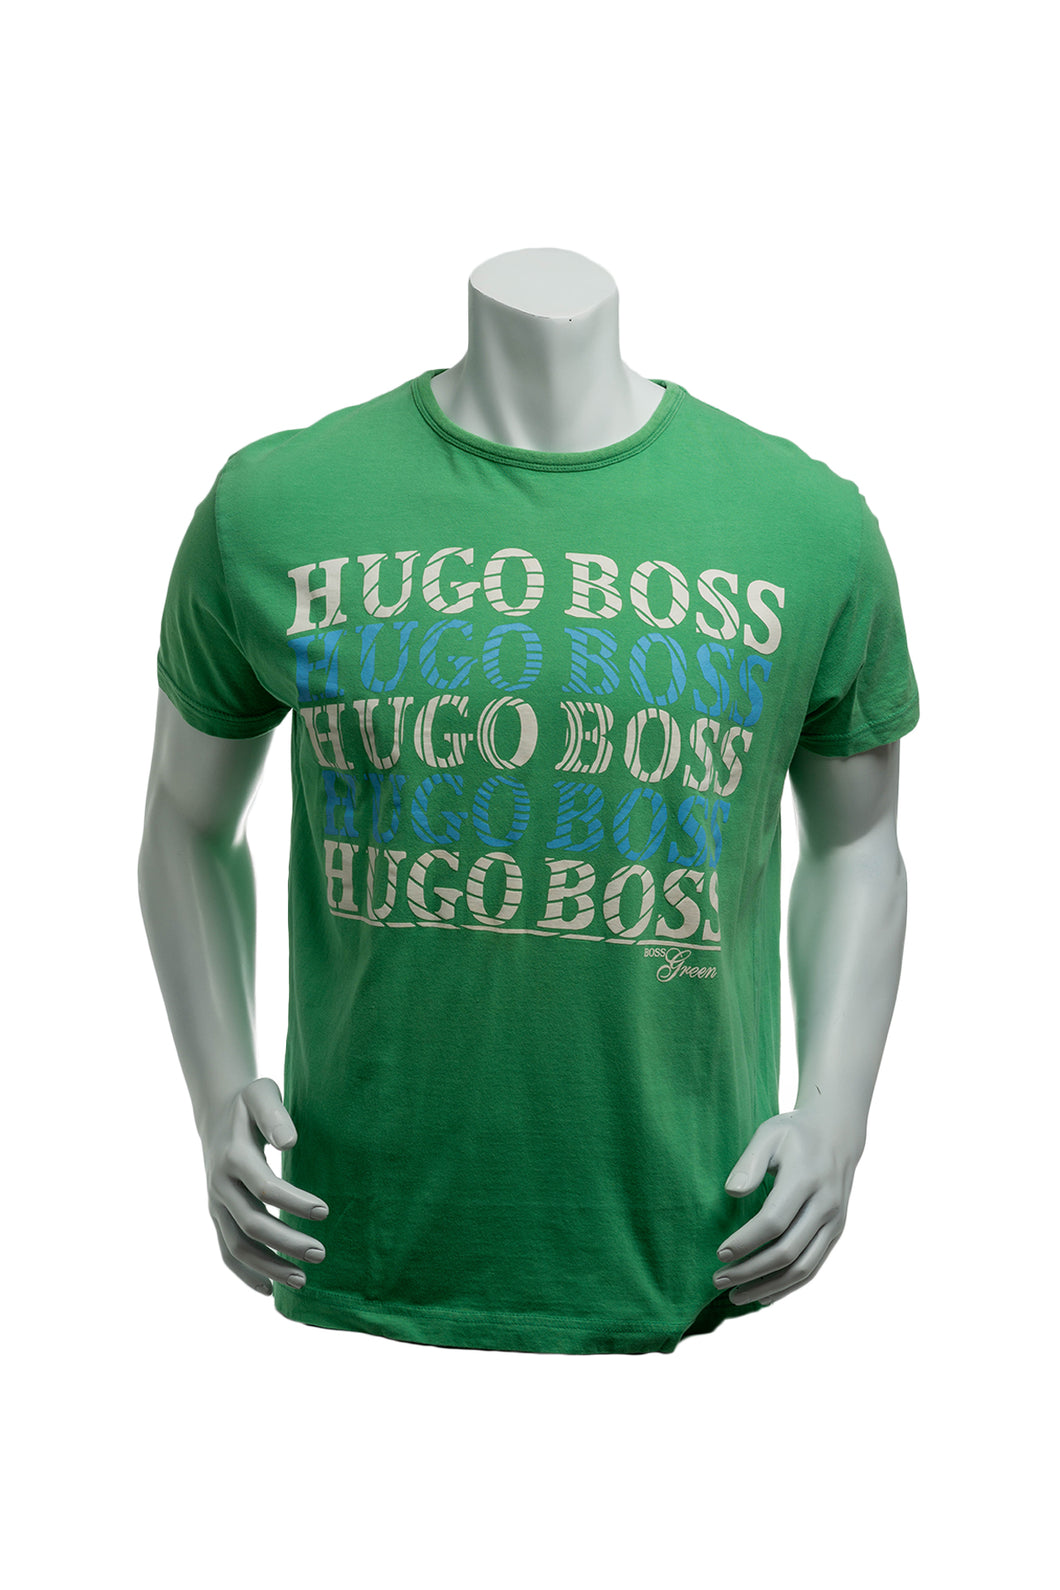 Hugo Boss Green Paper Thin T-Shirt Men's Large